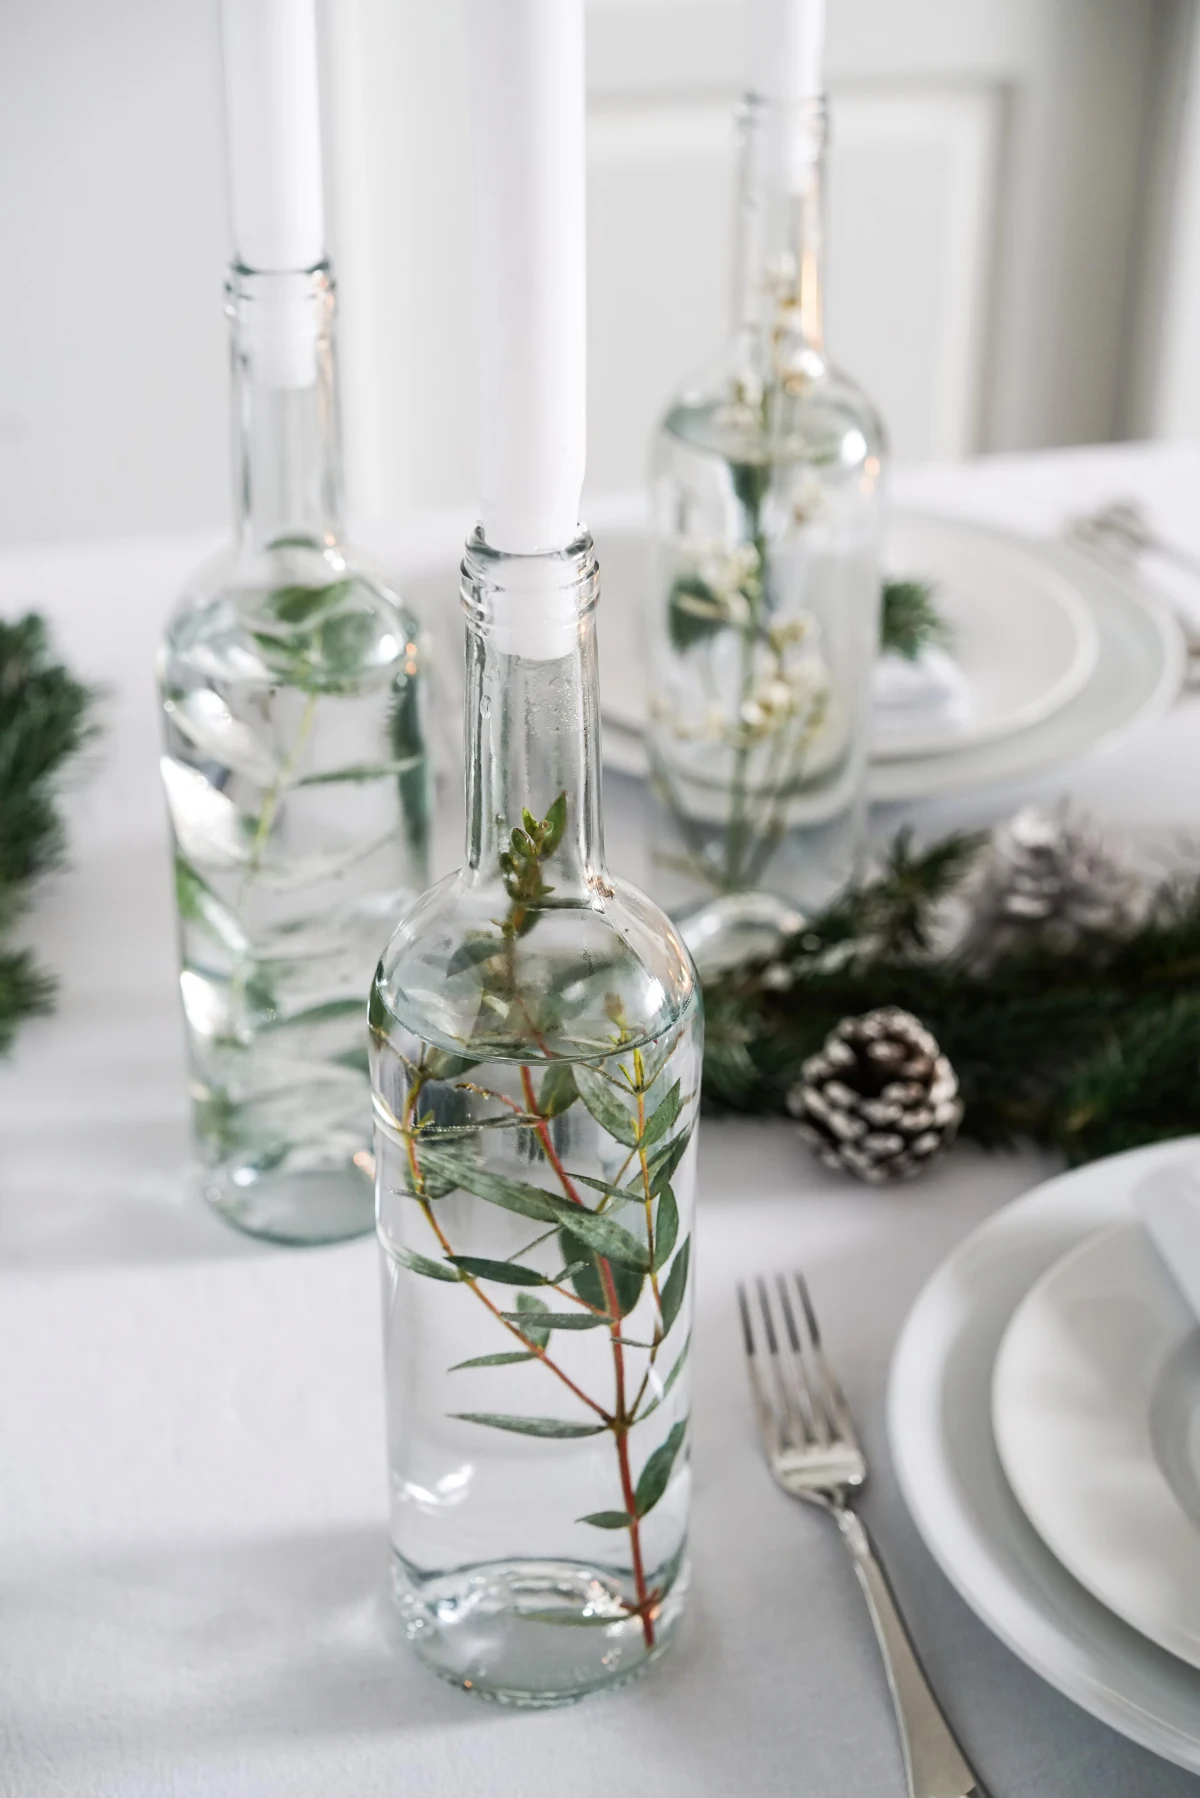 decoration table de noel minimaliste bougies blanches